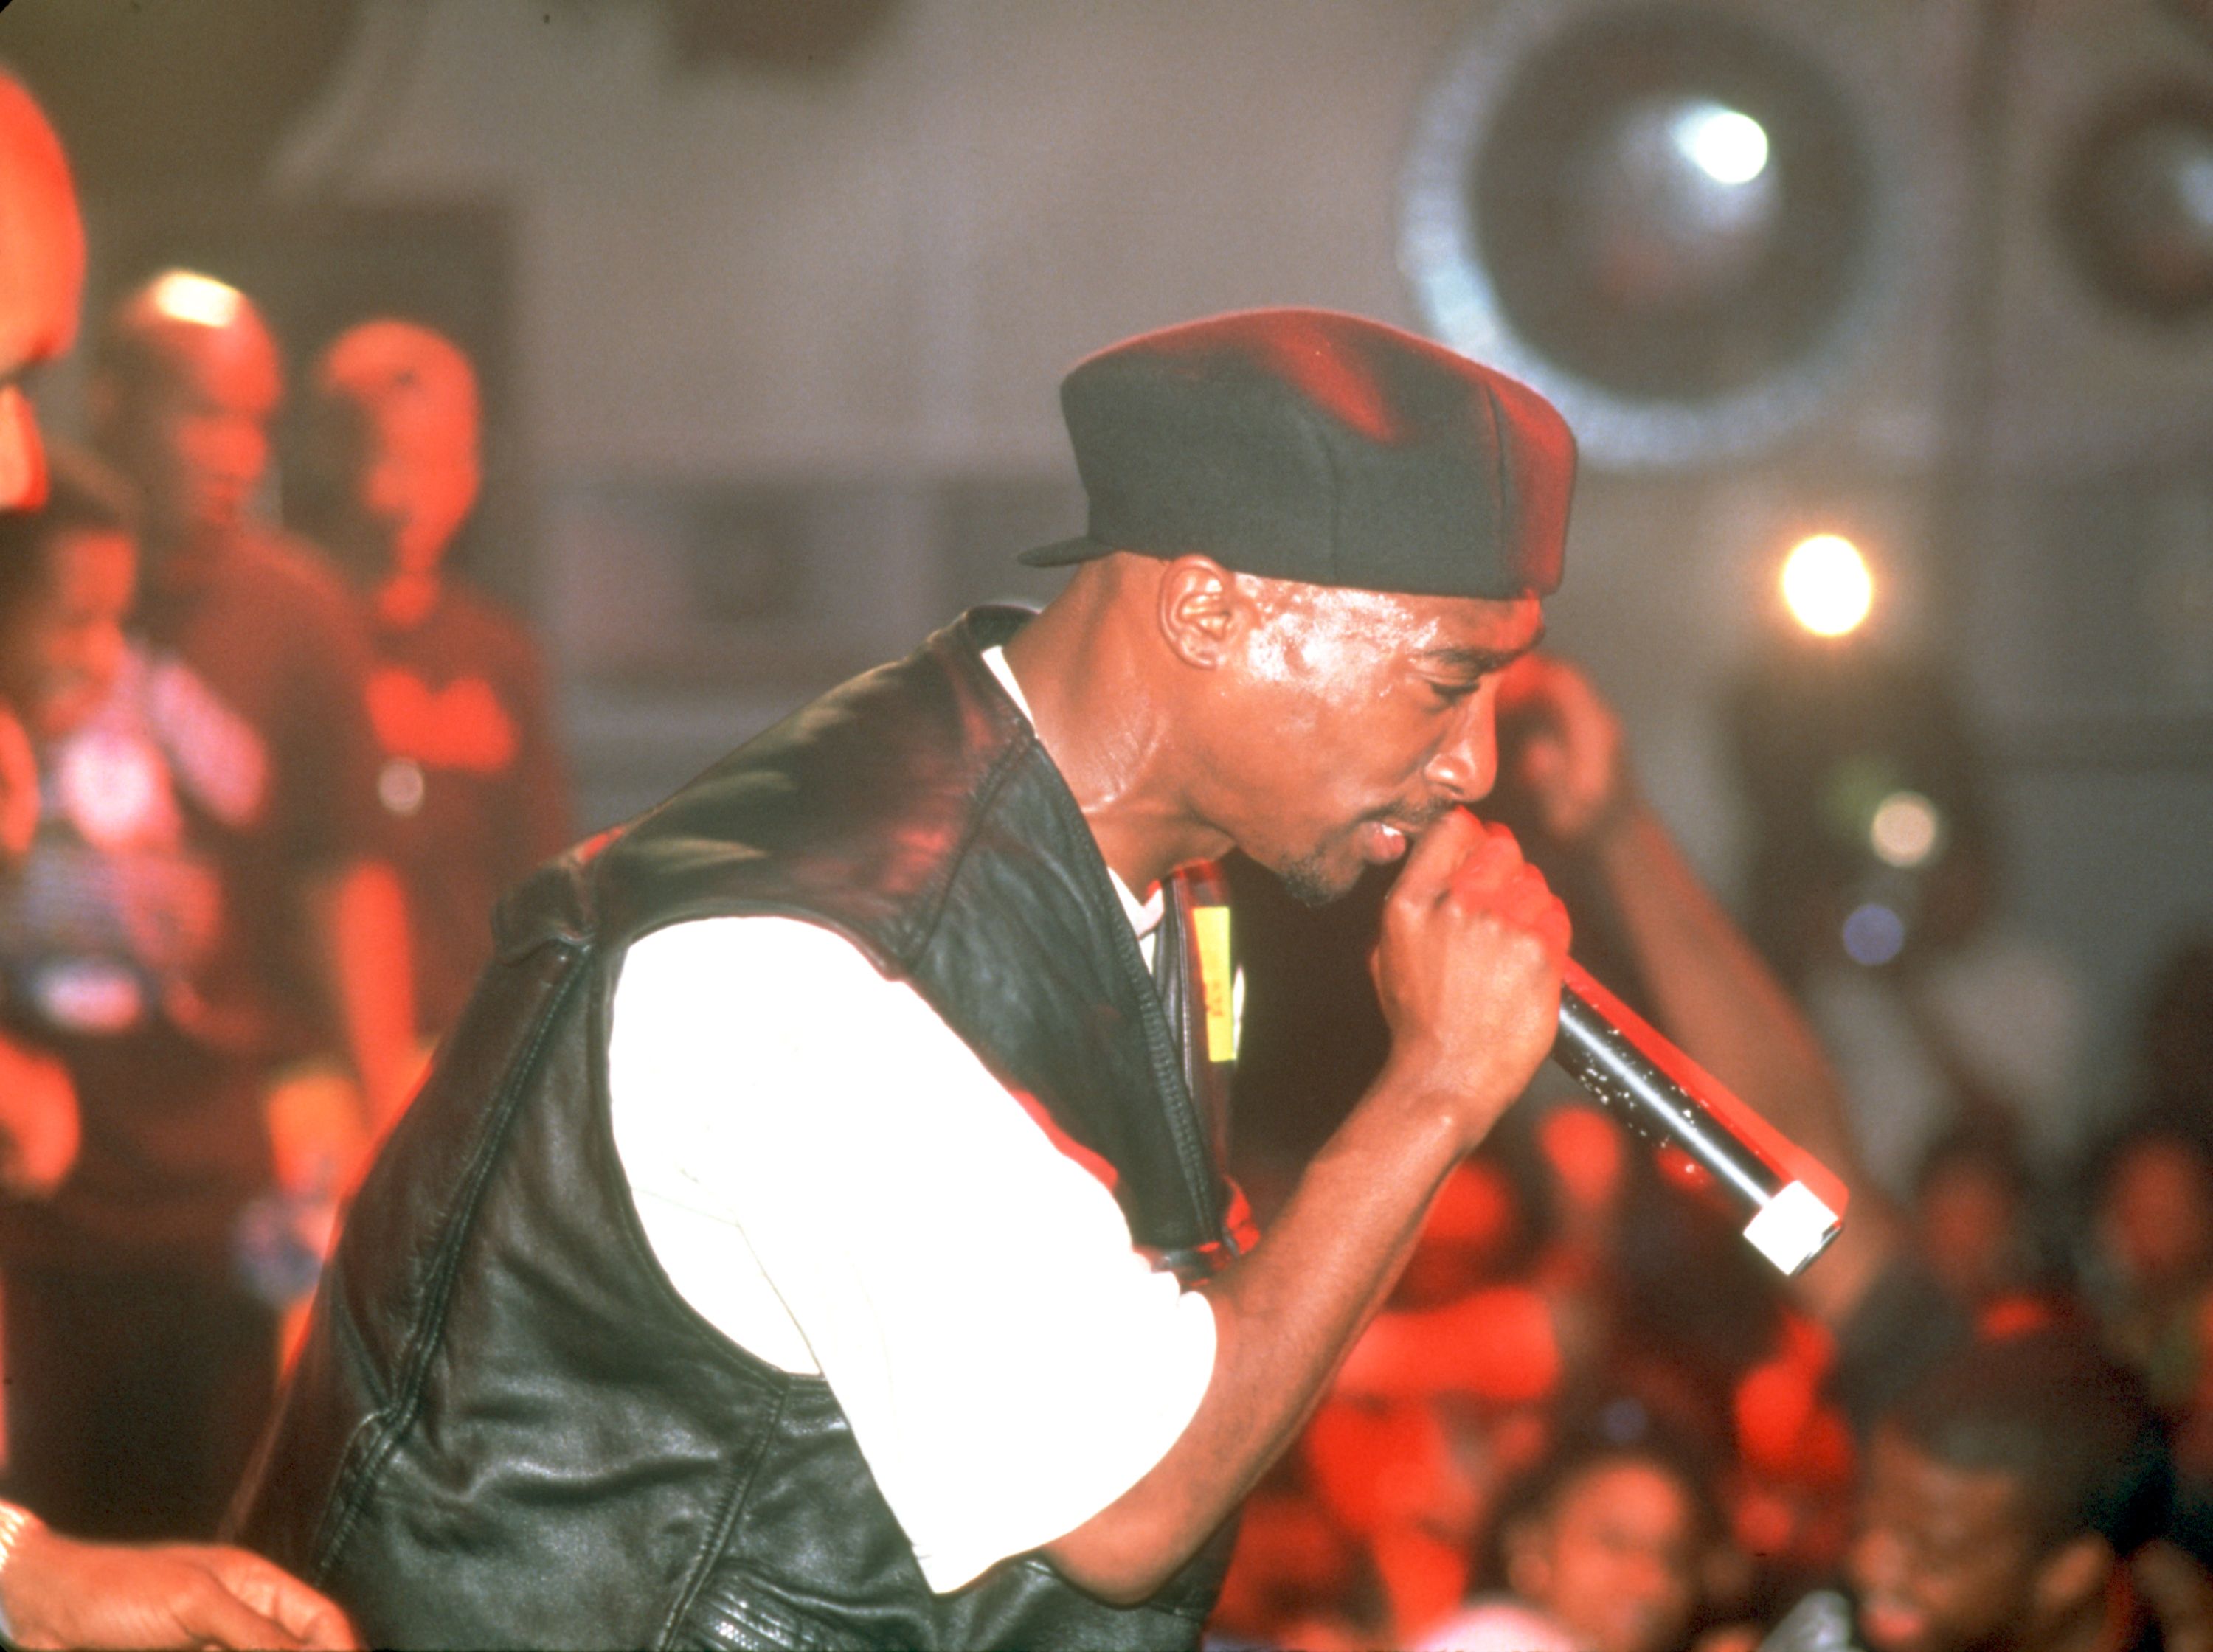 Tupac Shakur: Biography, Rapper, Actor